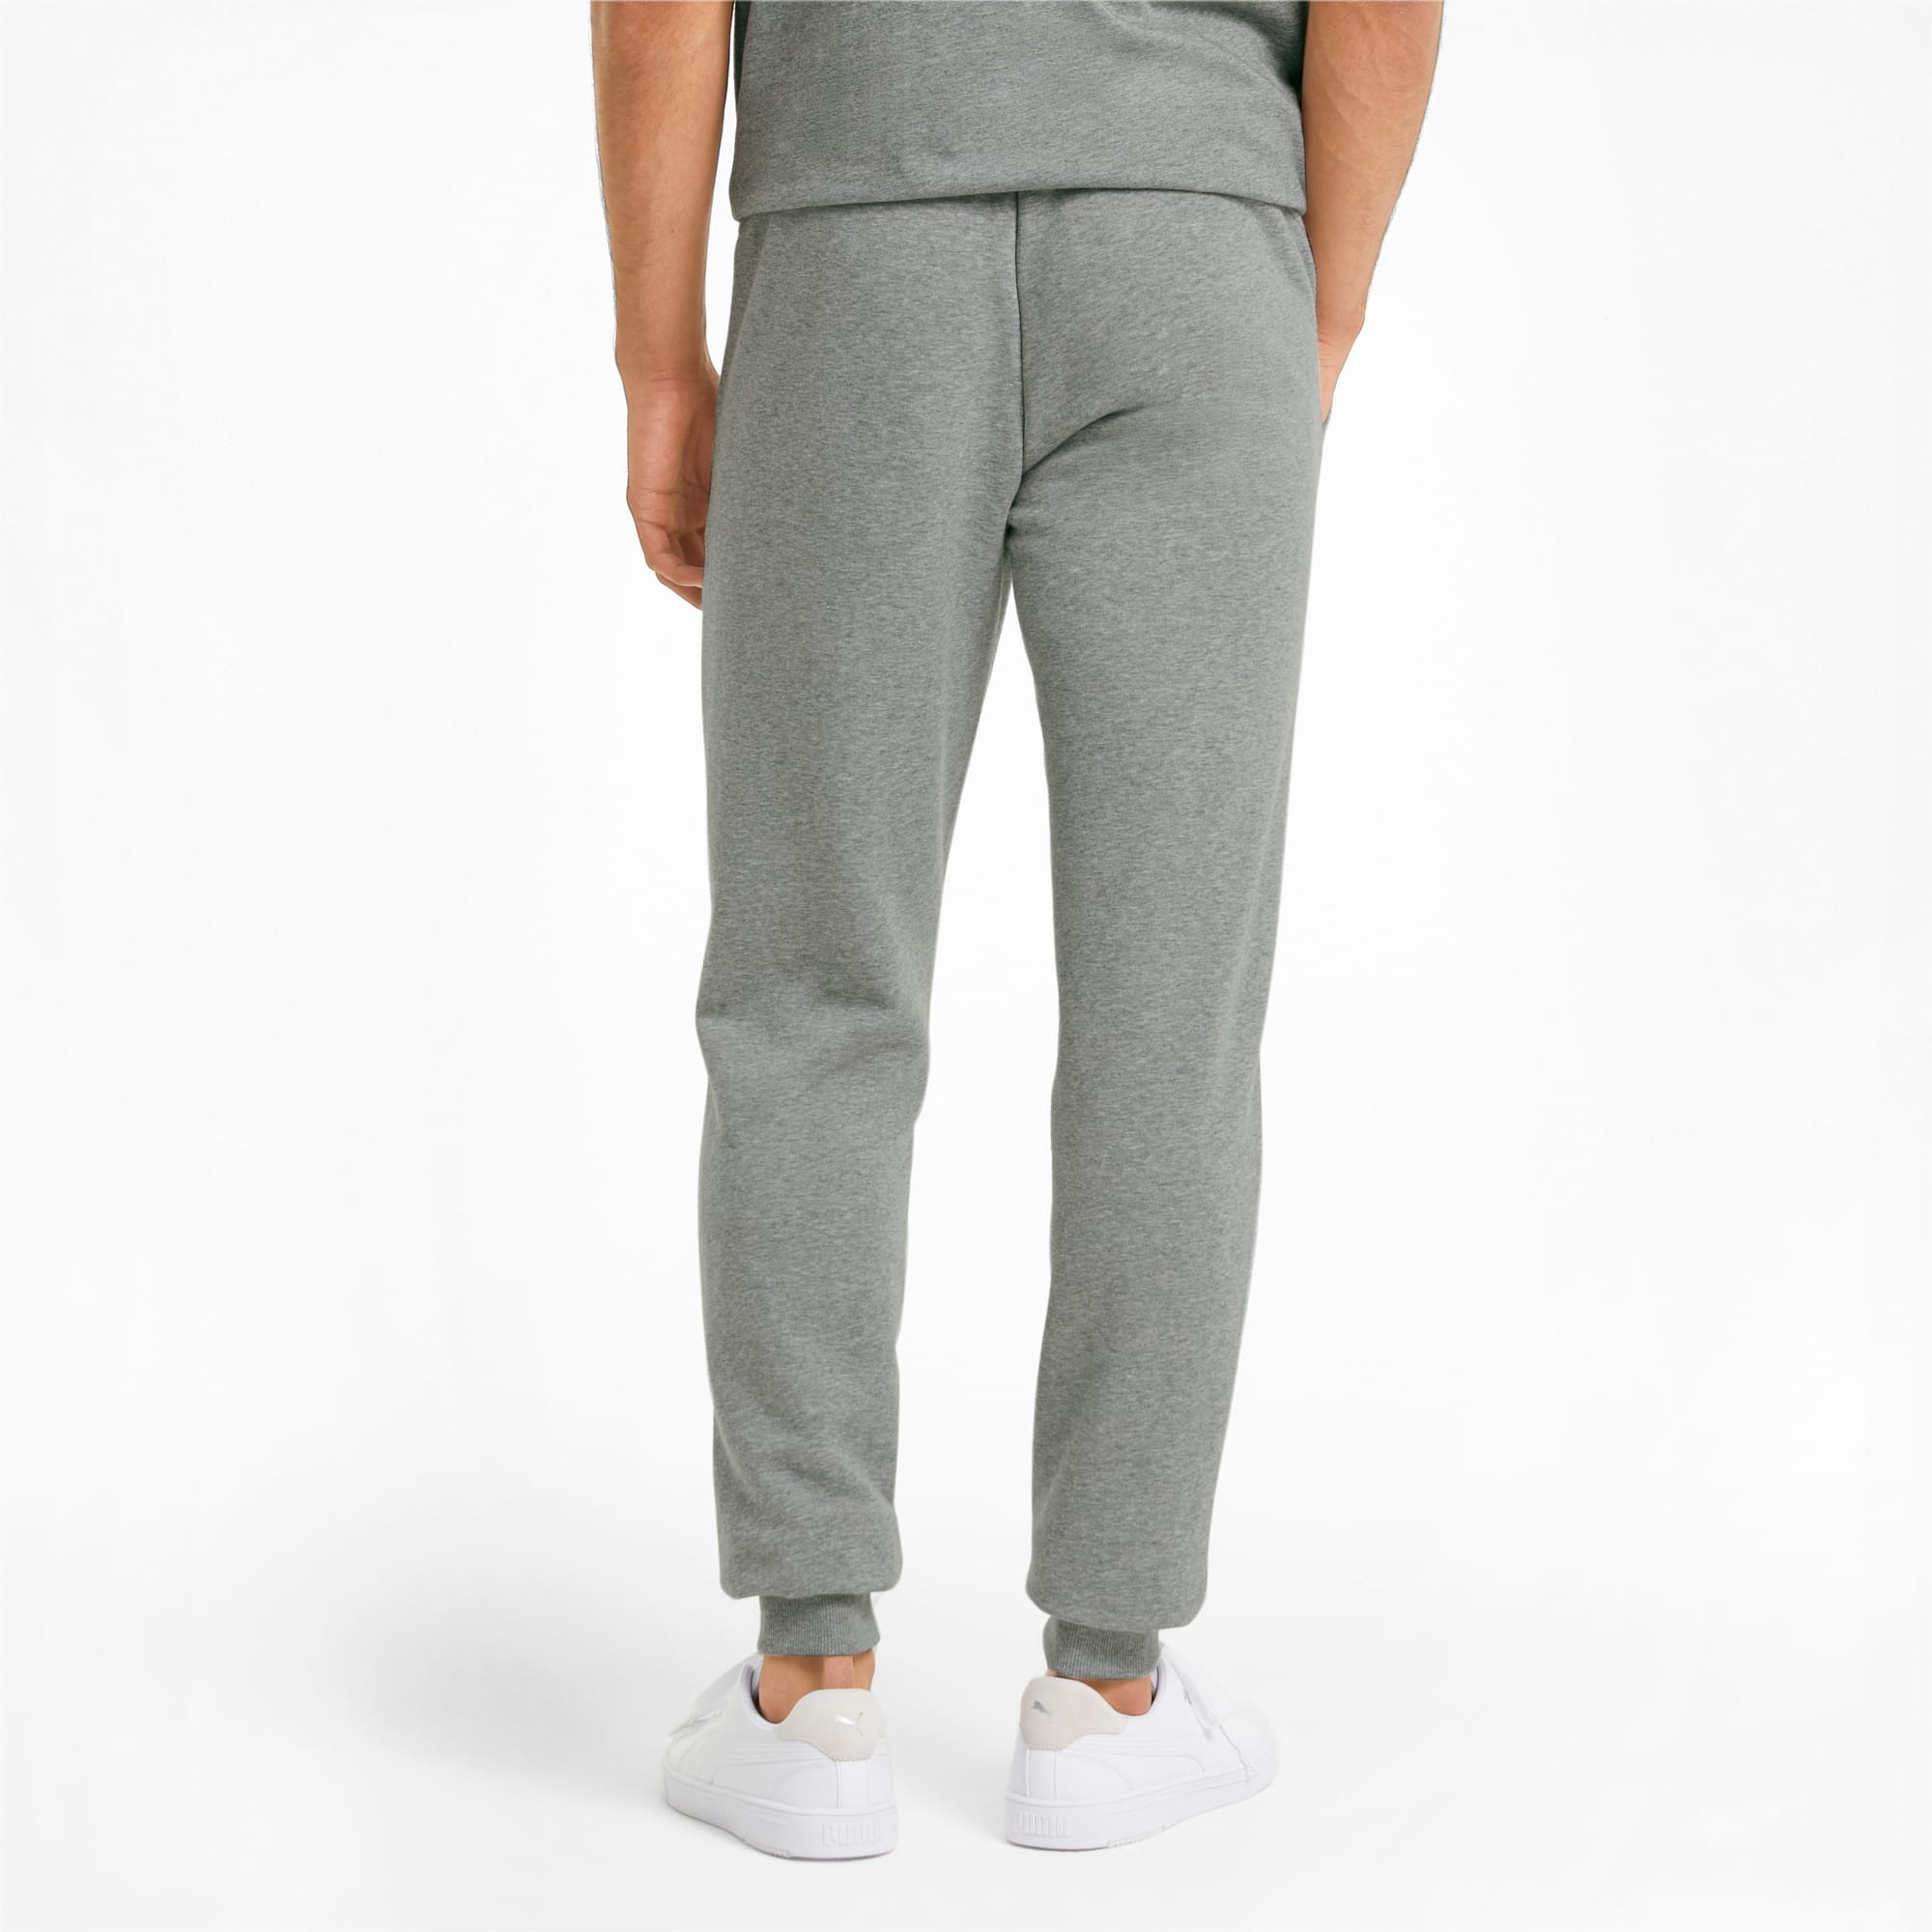 PUMA Essentials Slim Men's Pants, Medium Grey Heather, Size XXS, Clothing